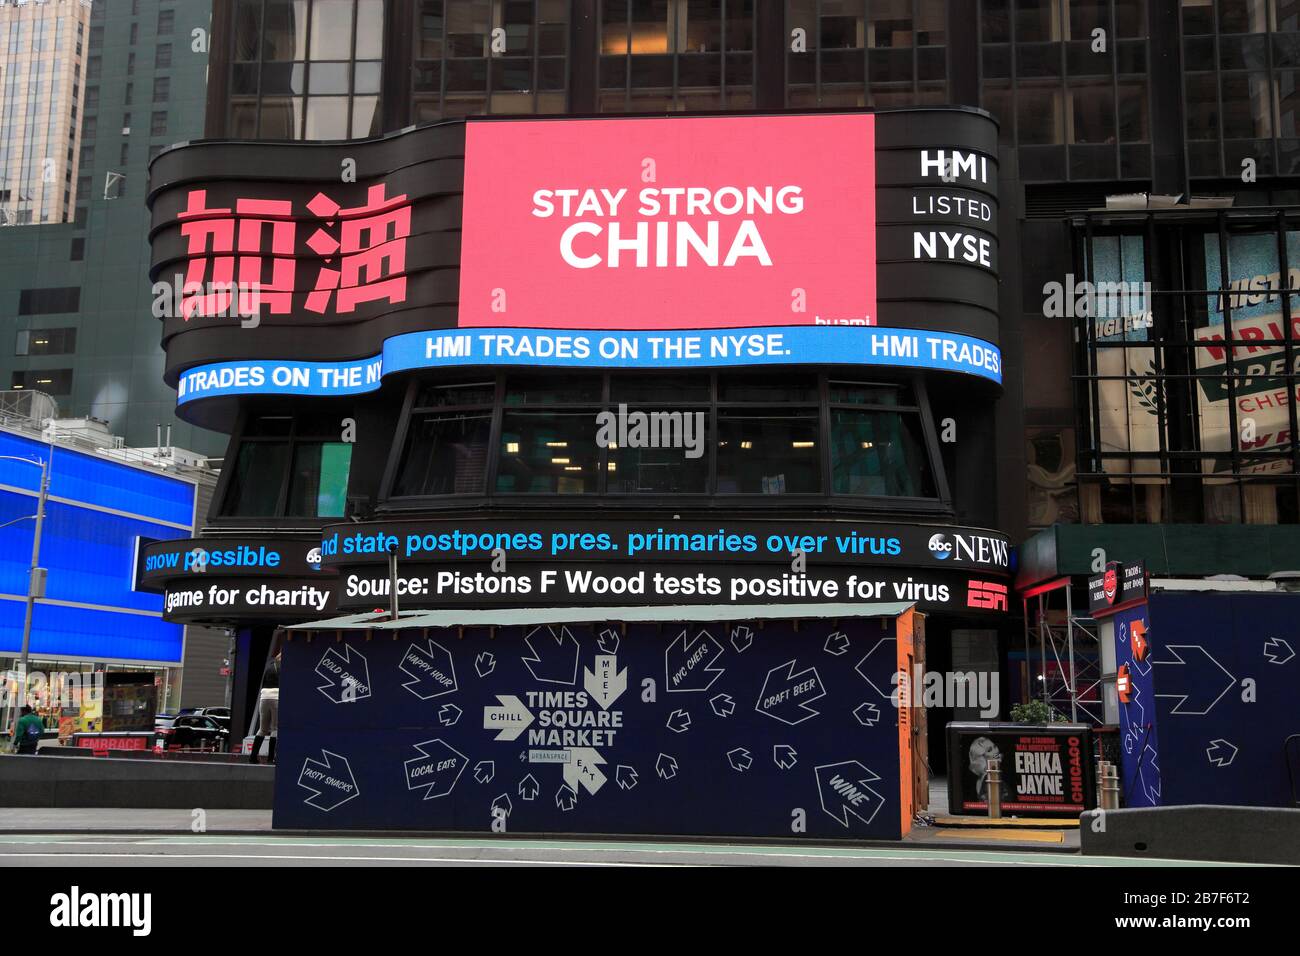 Times Square Huami Corporation, HMI, Billboard Stay String China, News Ticker, Christian Wood Detroit Pistons testet positives Coronavirus NYC 3/15 2020 Stockfoto